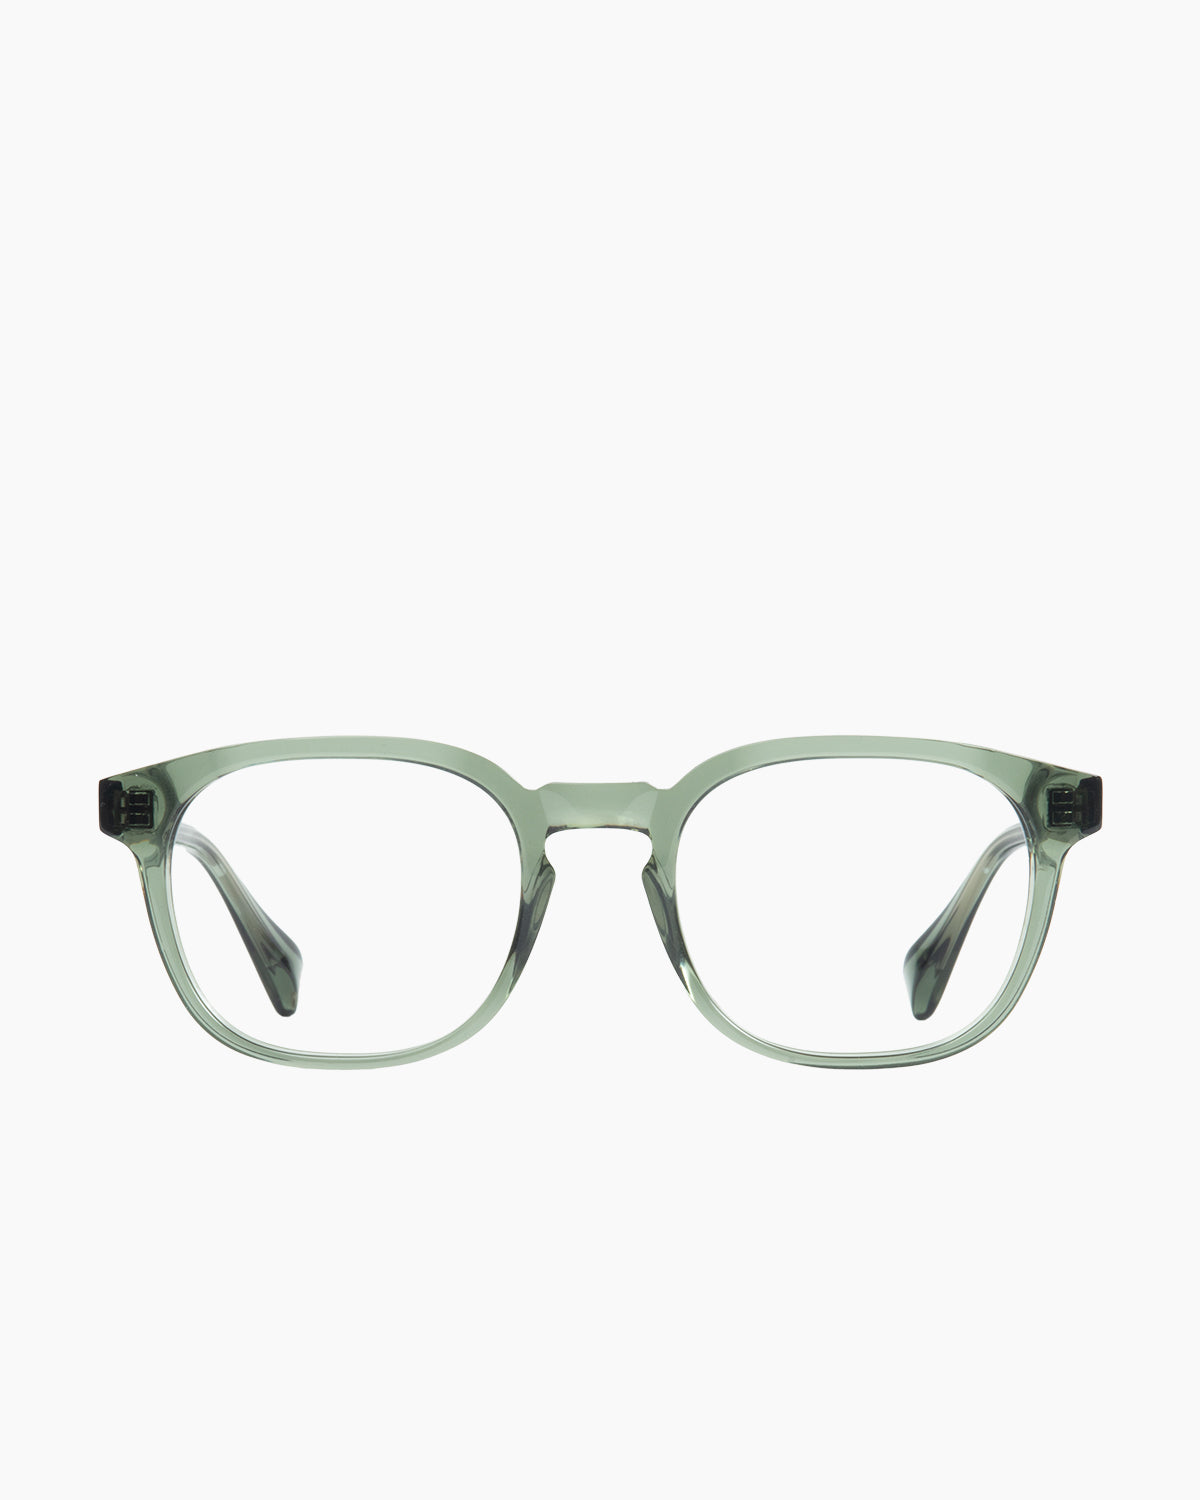 Francois Pinton - Haussmann8 - Gg | glasses bar:  Marie-Sophie Dion